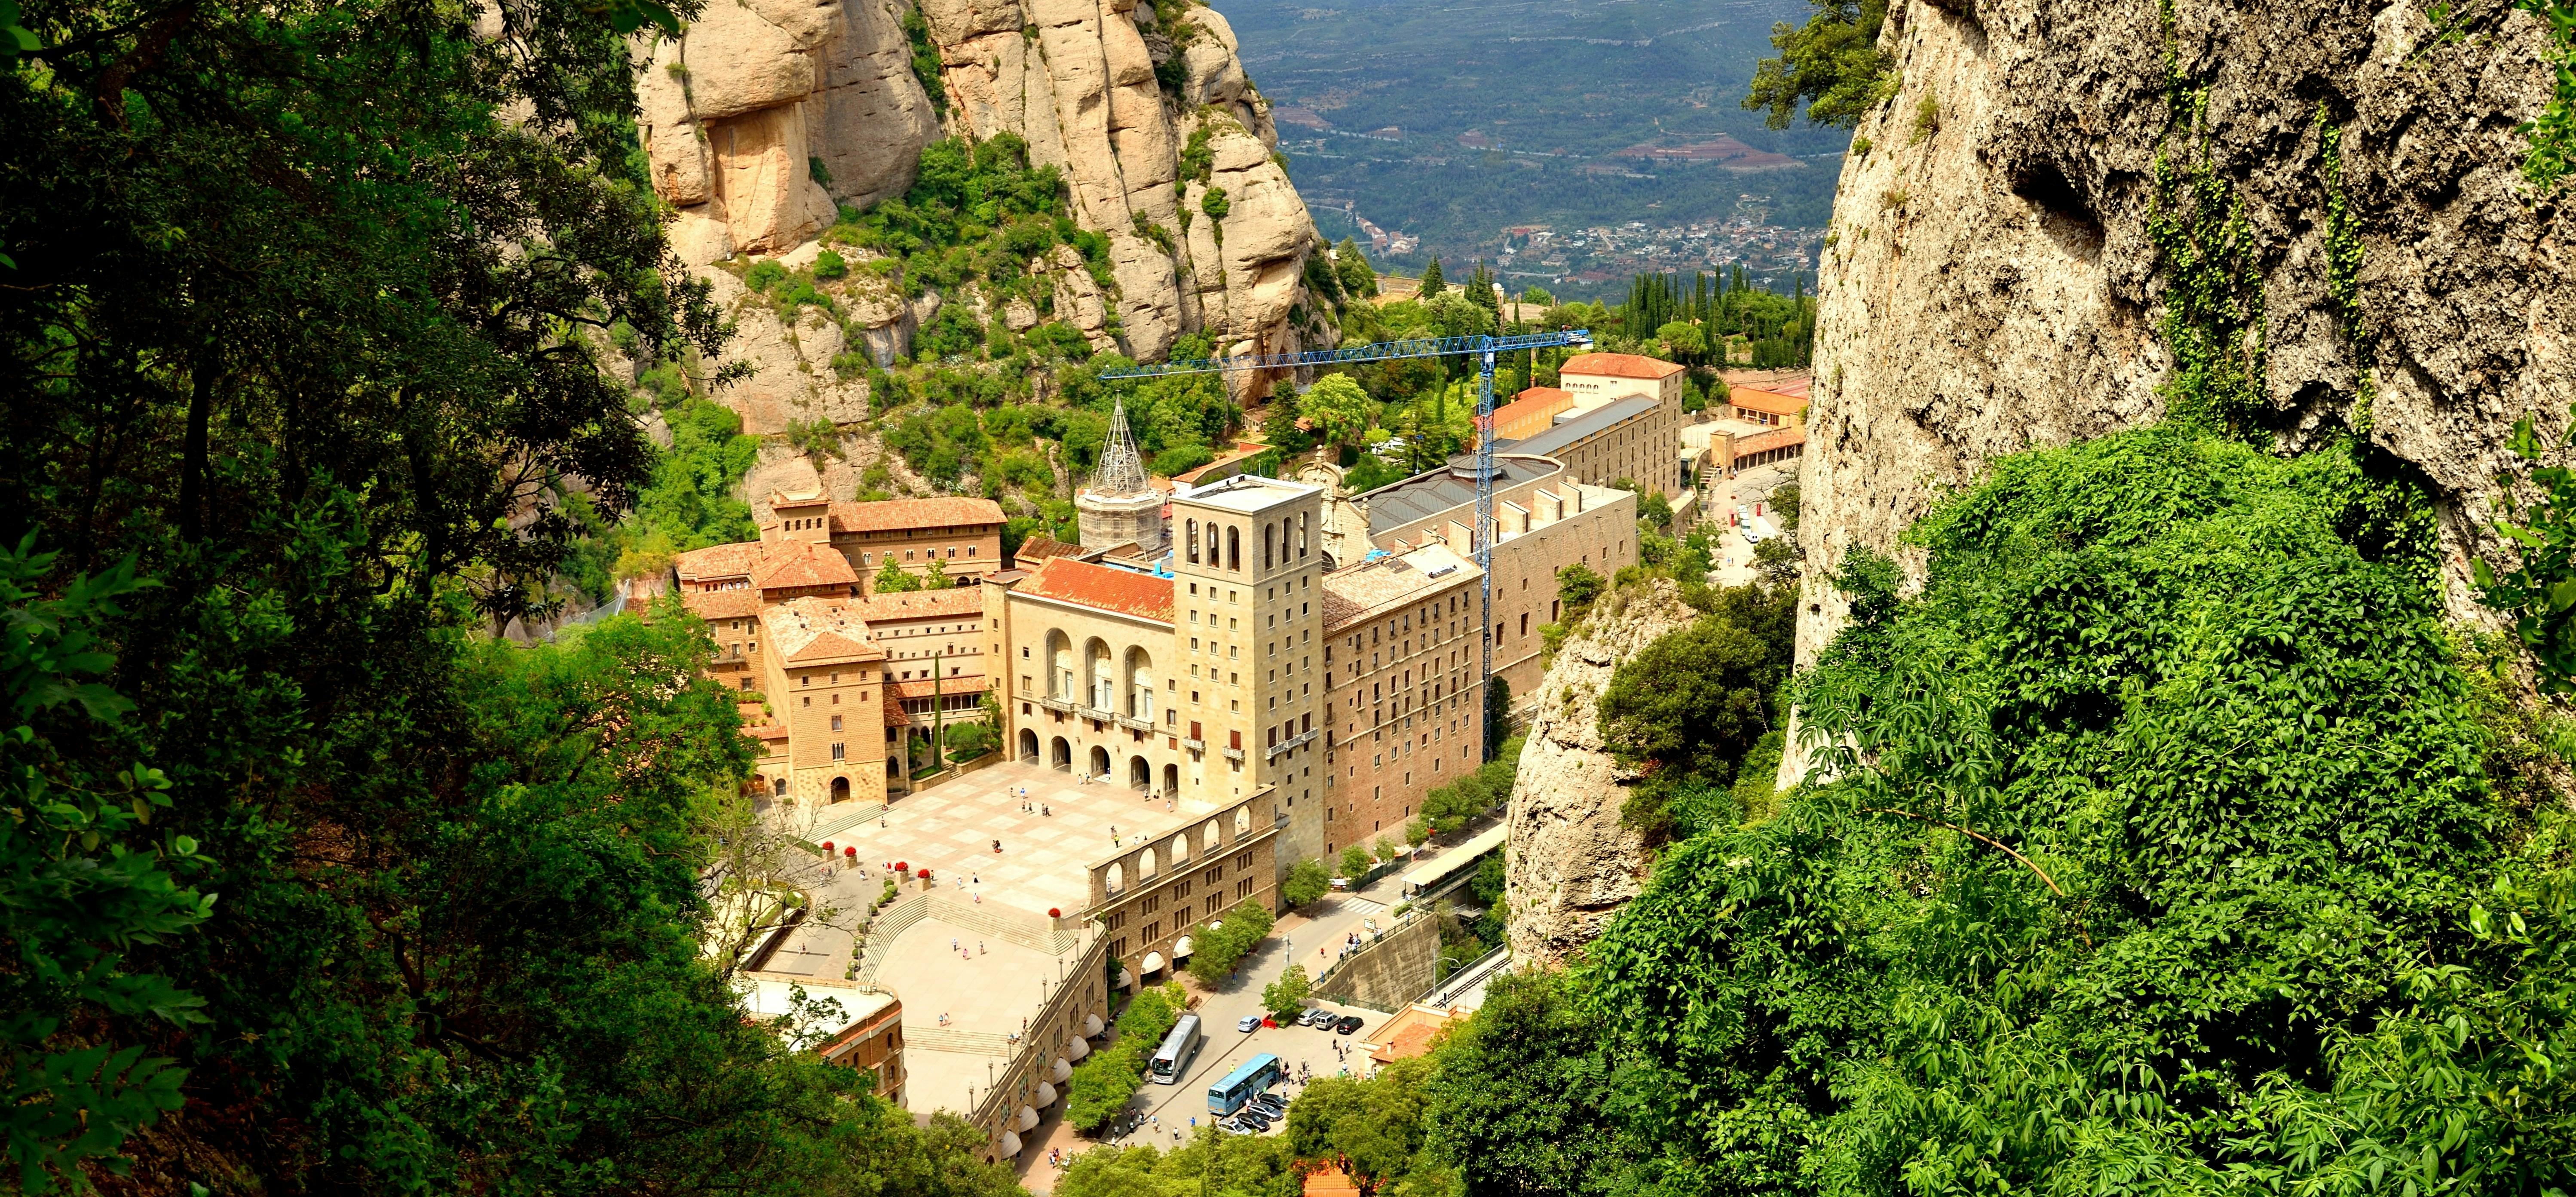 Visita guiada al monasterio de Montserrat por la mañana